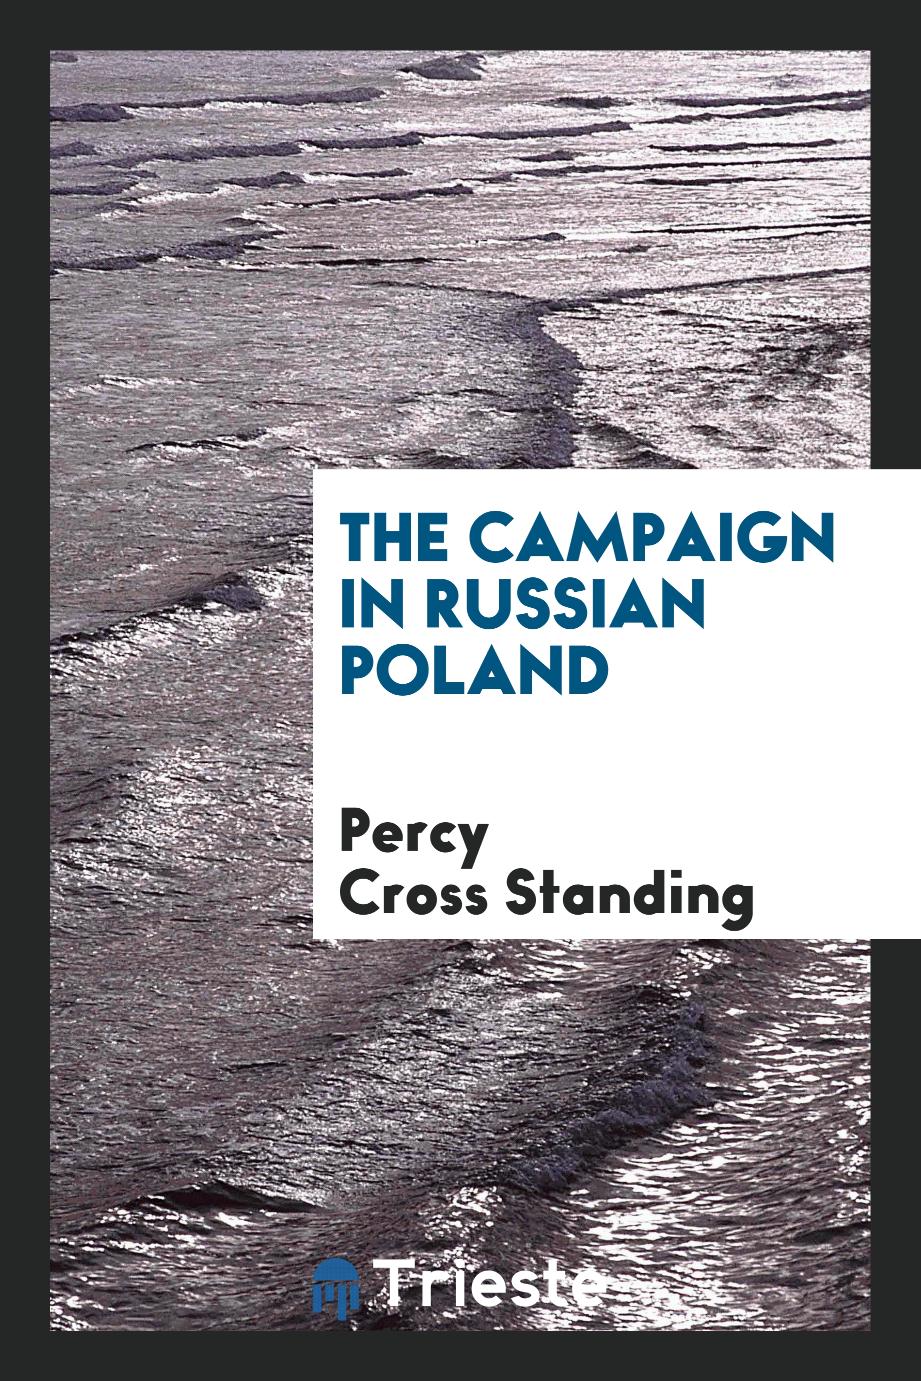 The campaign in Russian Poland